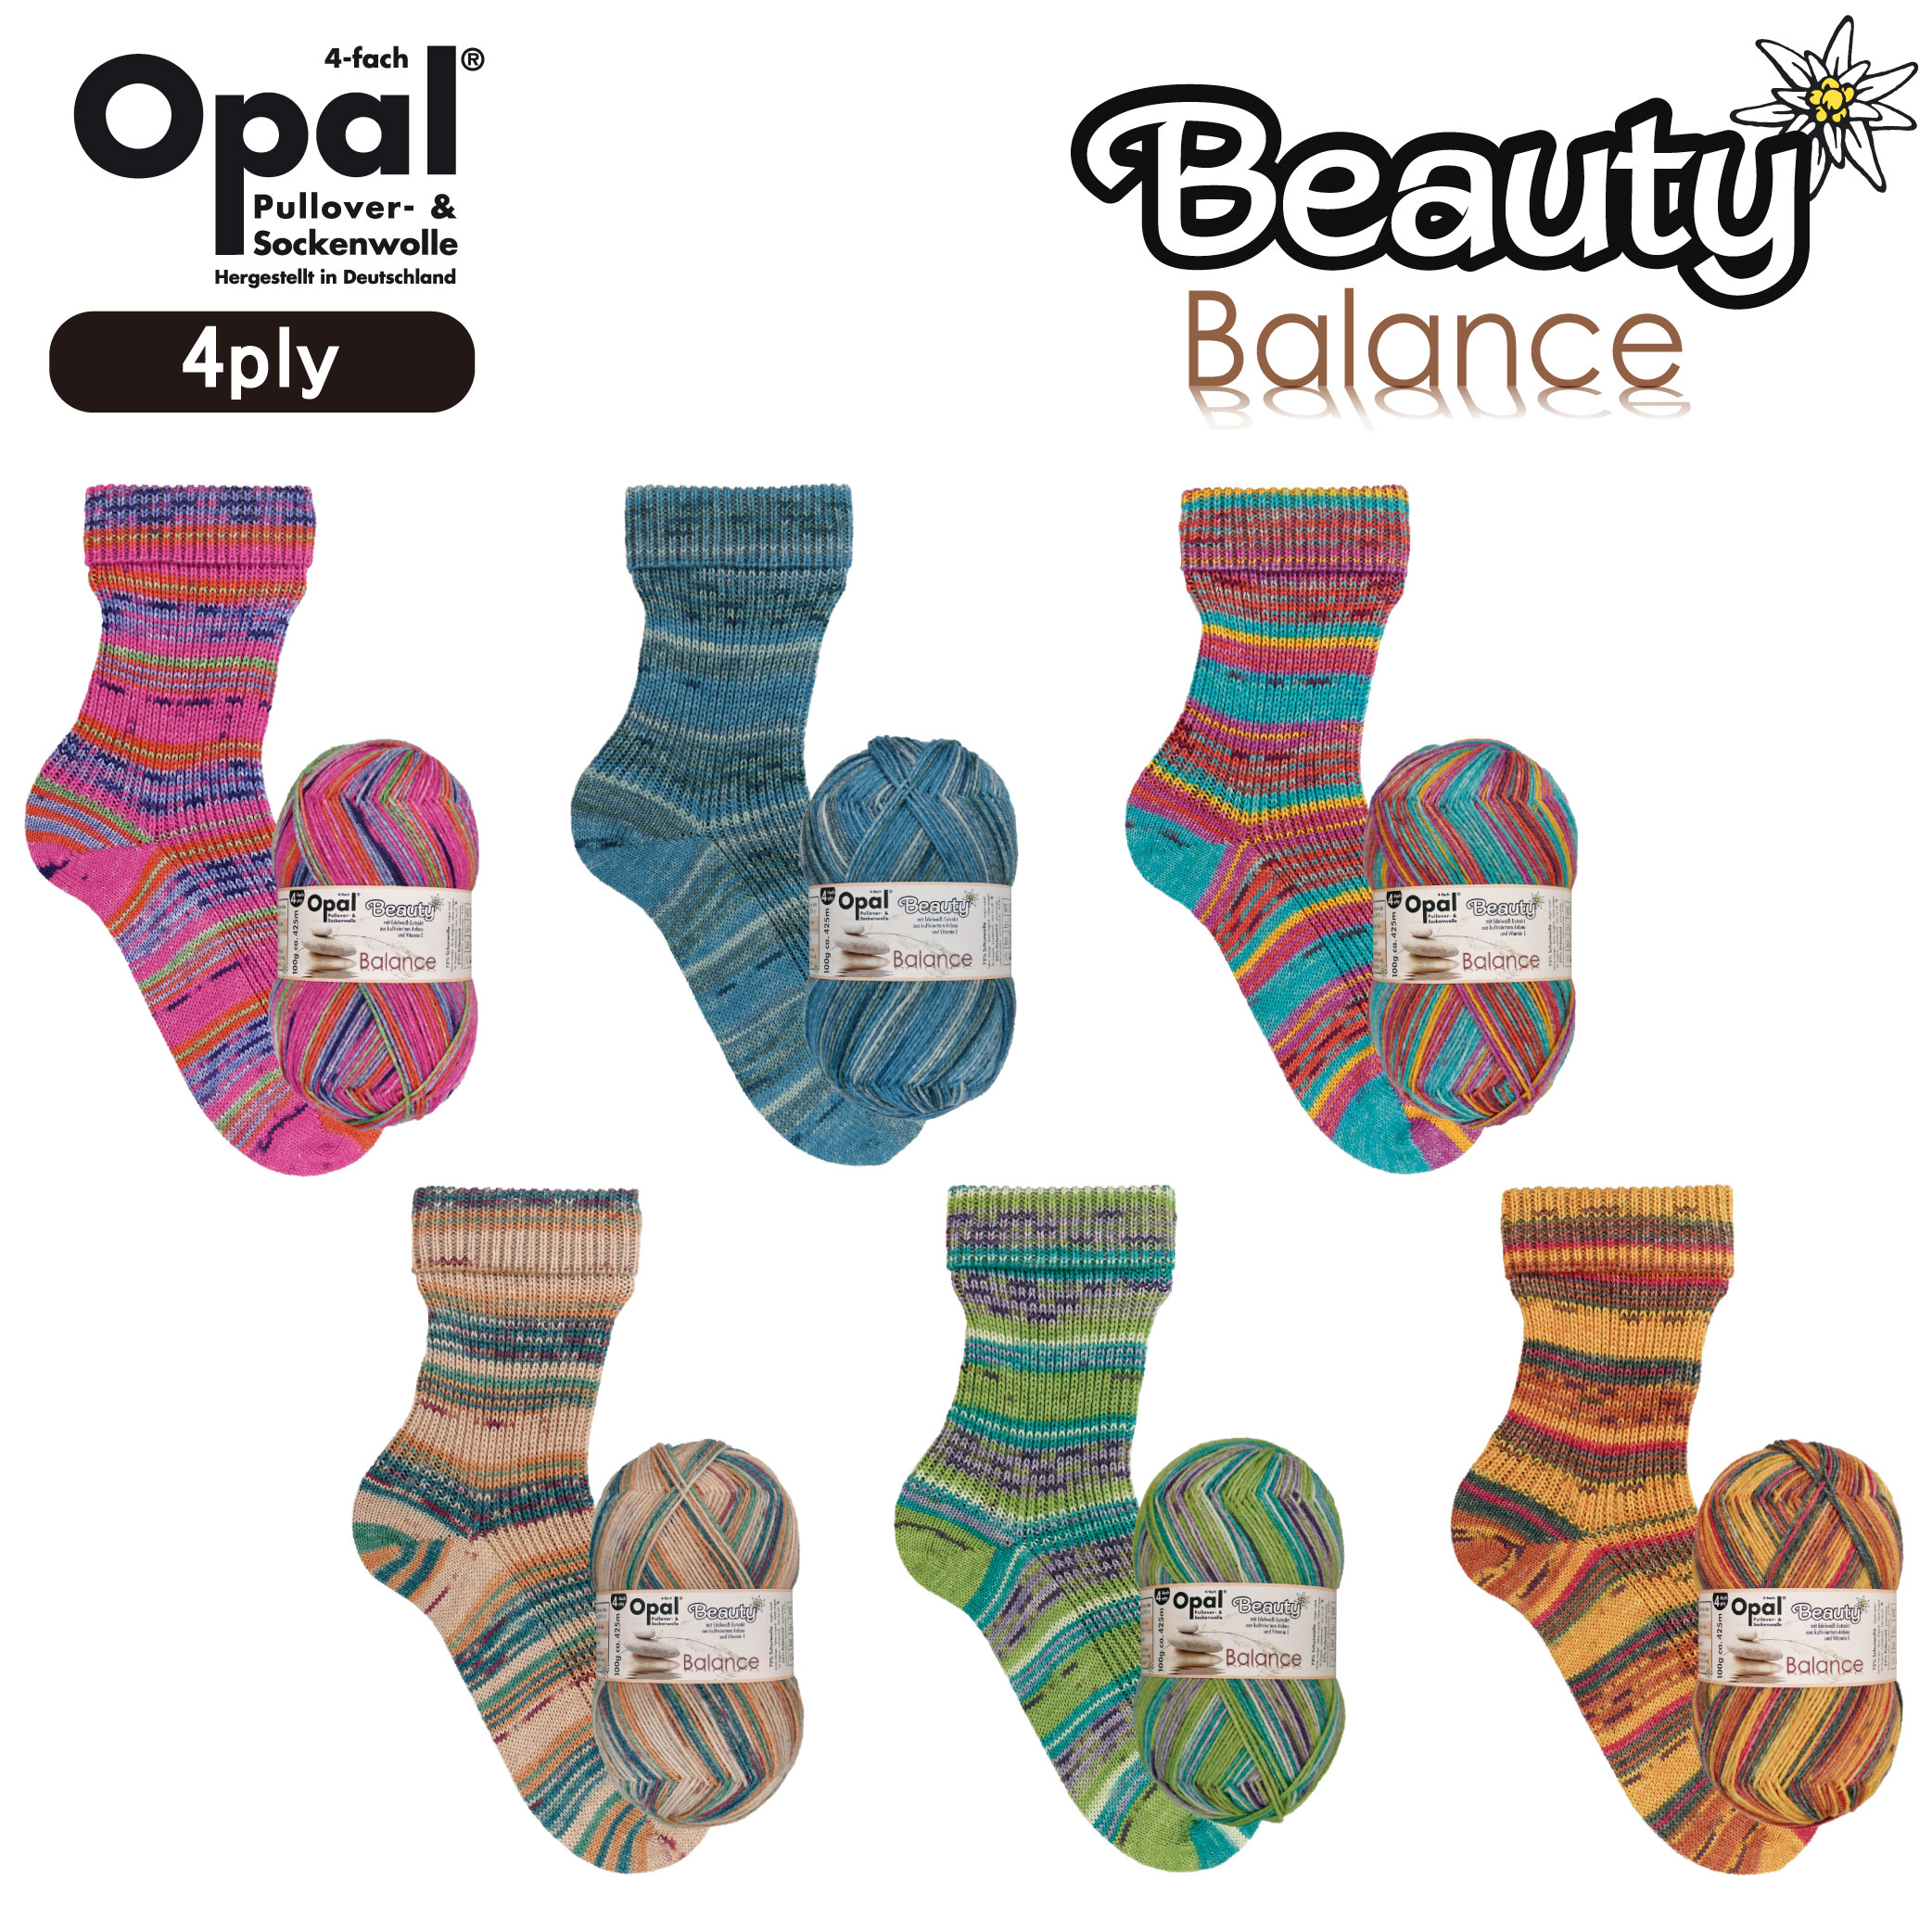 Opal Beauty Balance